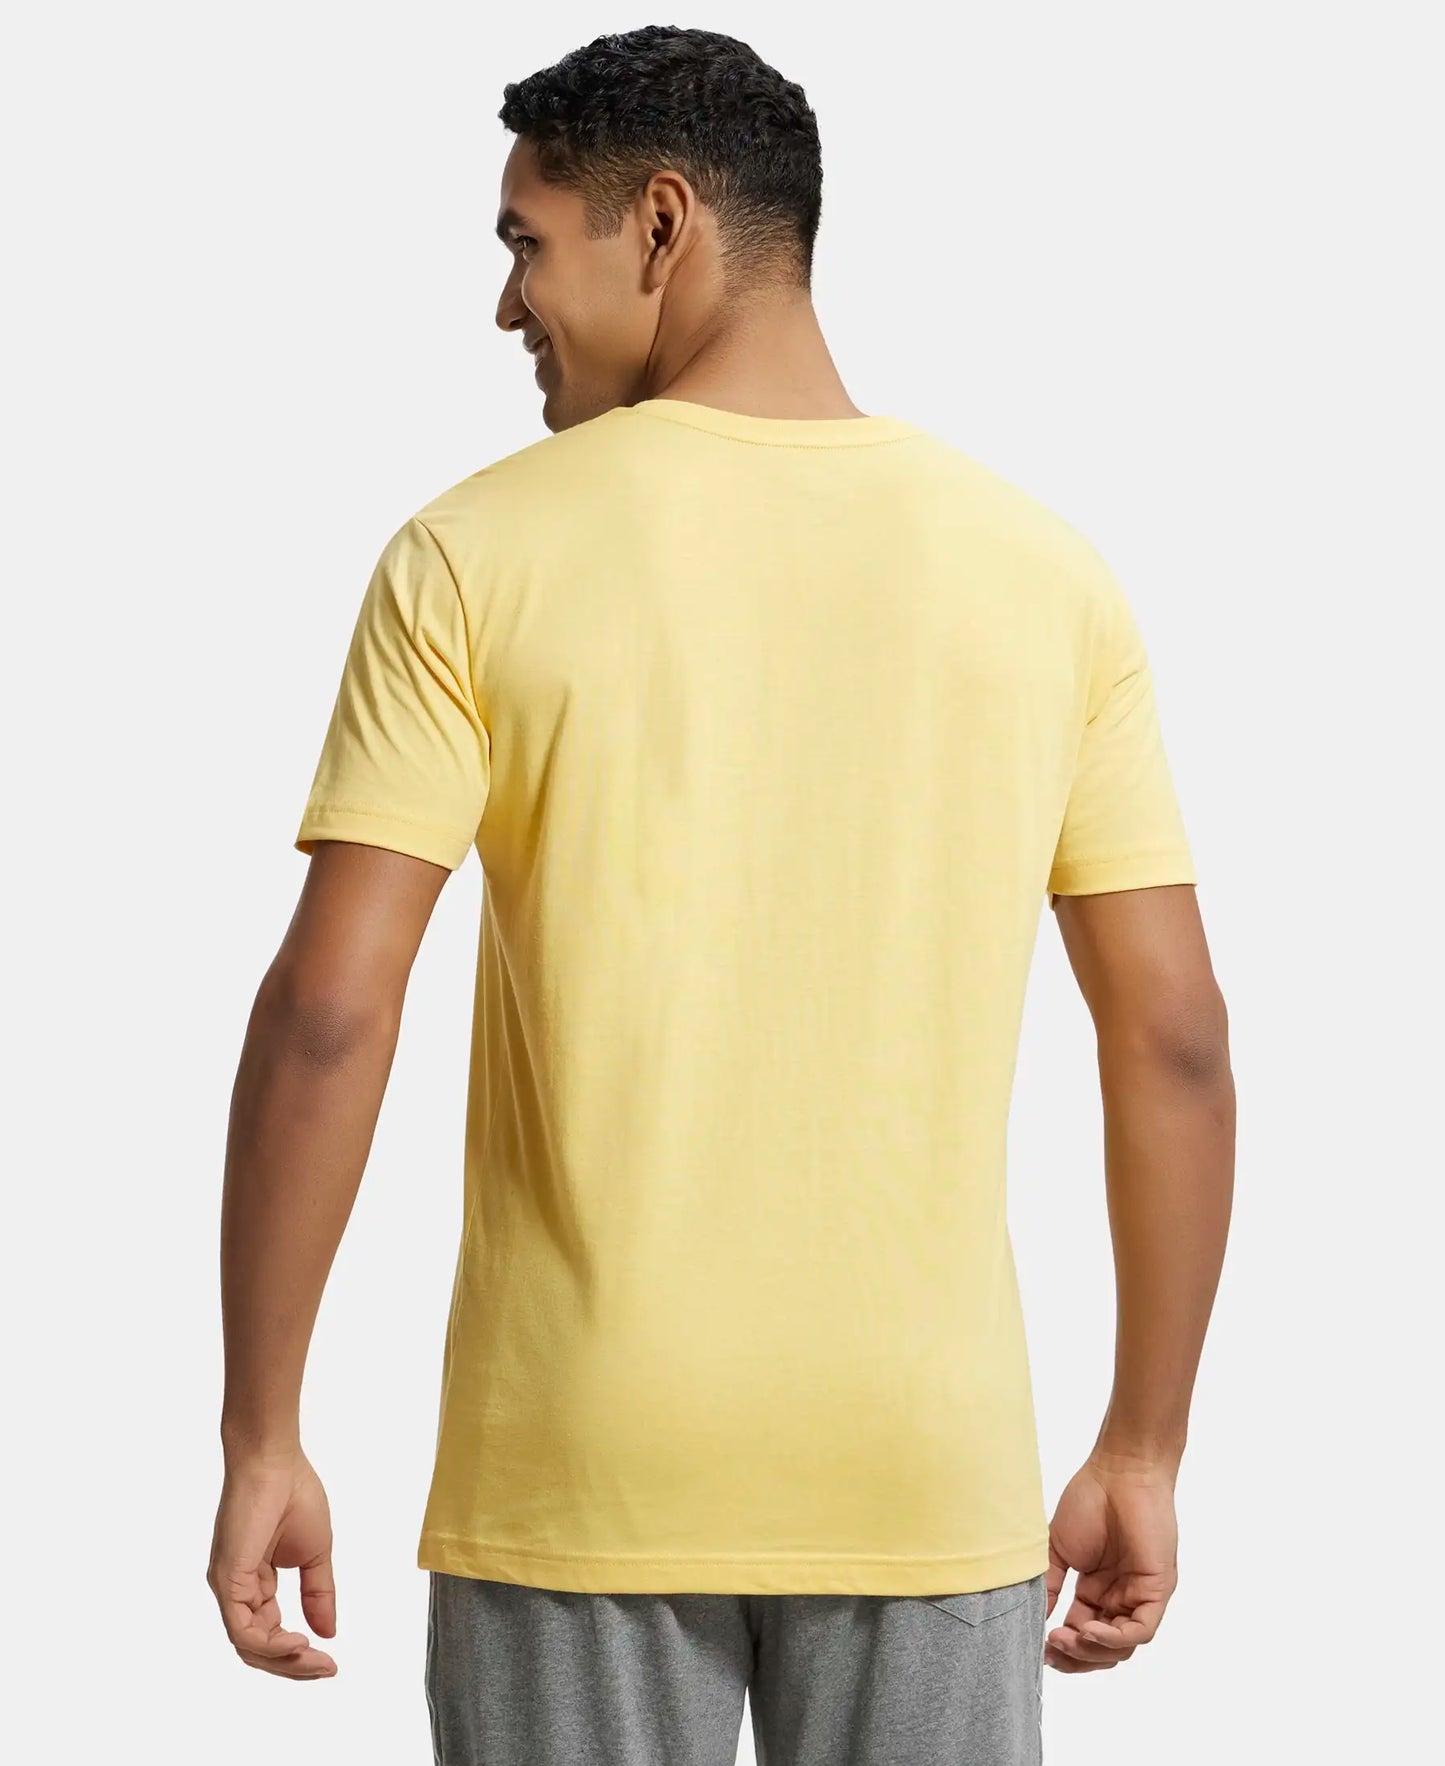 Super Combed Cotton Rich Solid V Neck Half Sleeve T-Shirt  - Corn Silk-3